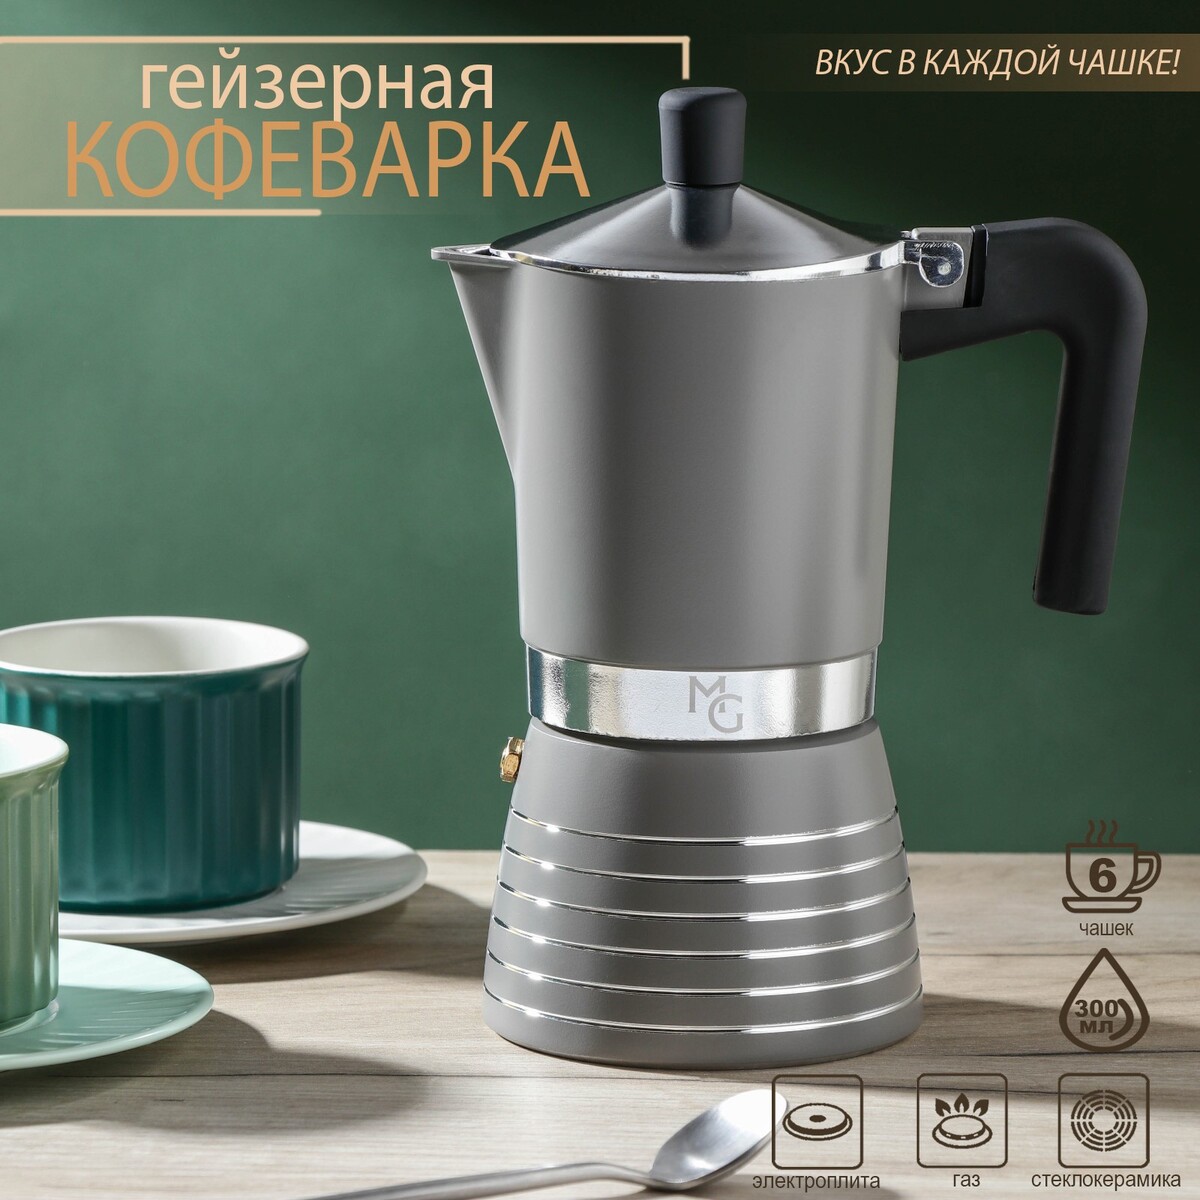 Кофеварка гейзерная magistro moka, на 6 чашек, 300 мл кофеварка гейзерная magistro moka на 6 чашек 300 мл